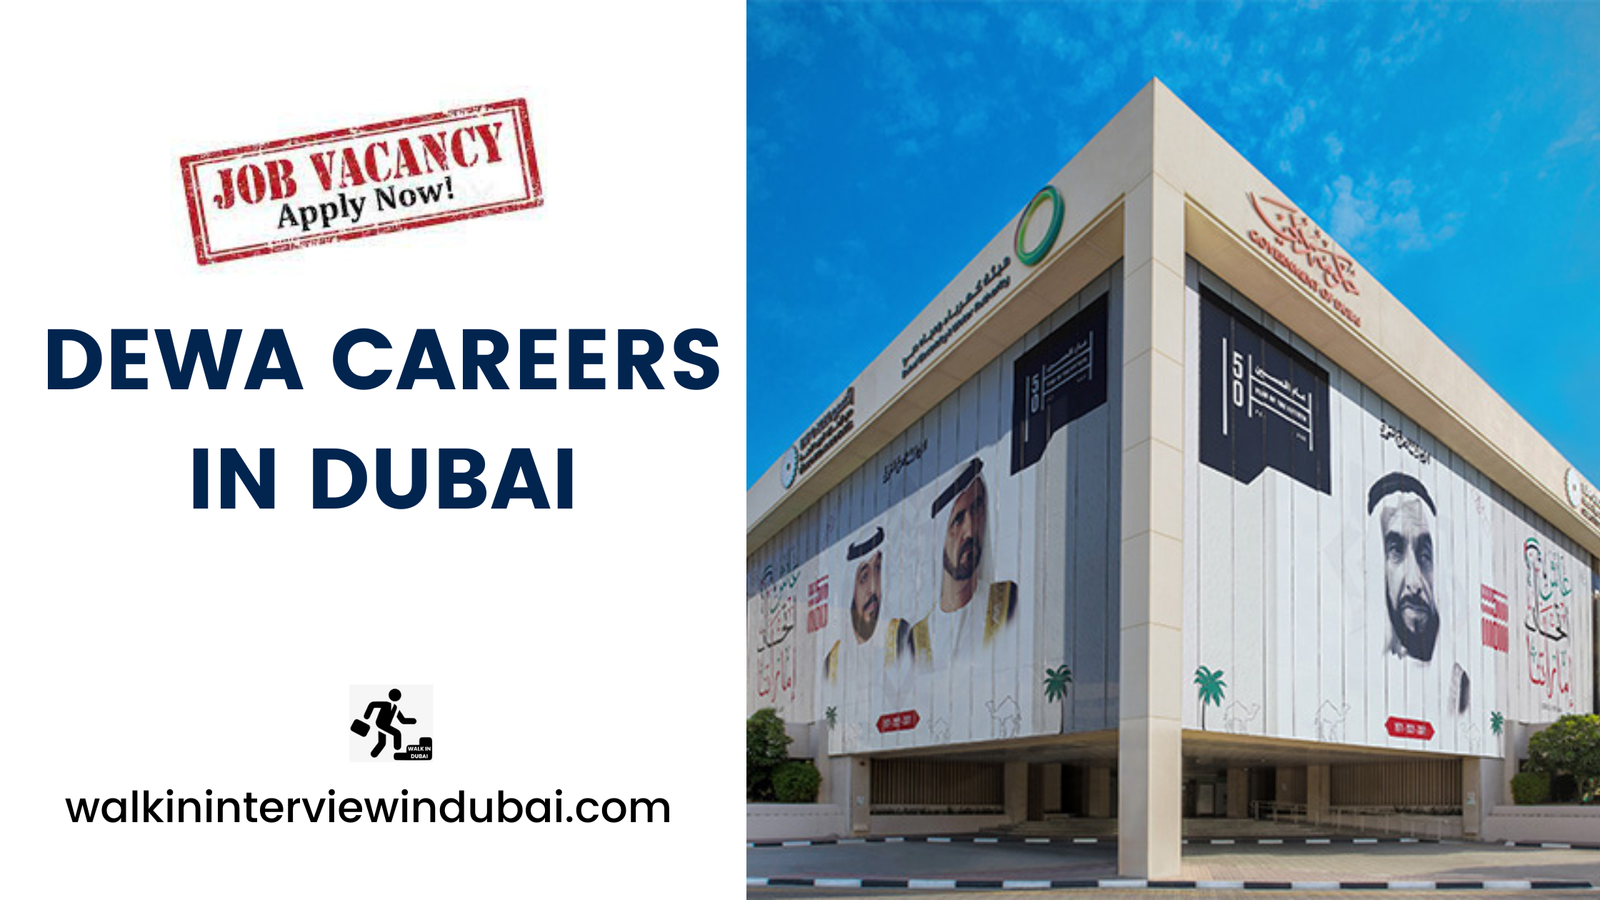 DEWA Careers in Dubai